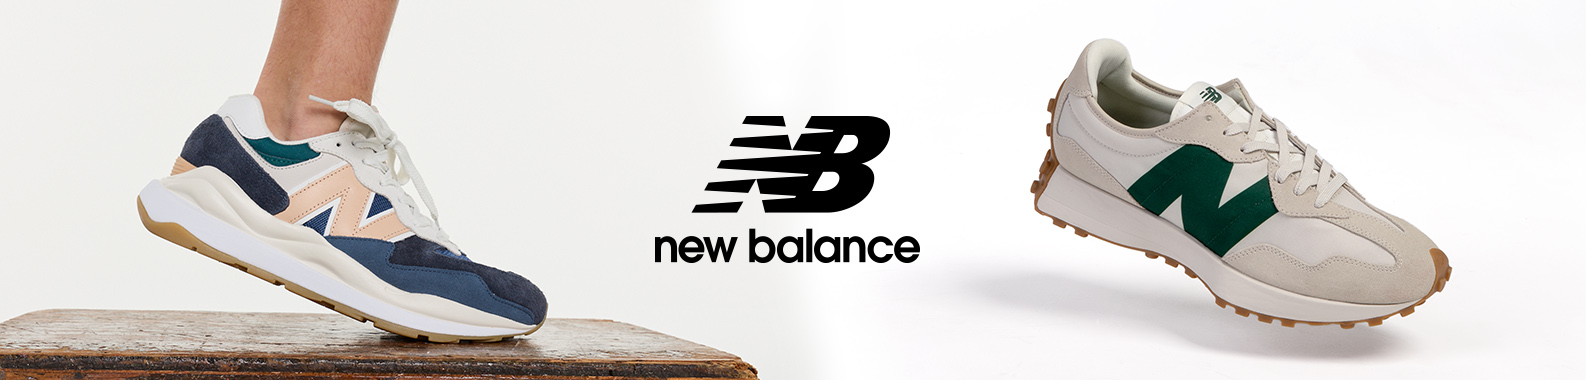 New Balance brand header image